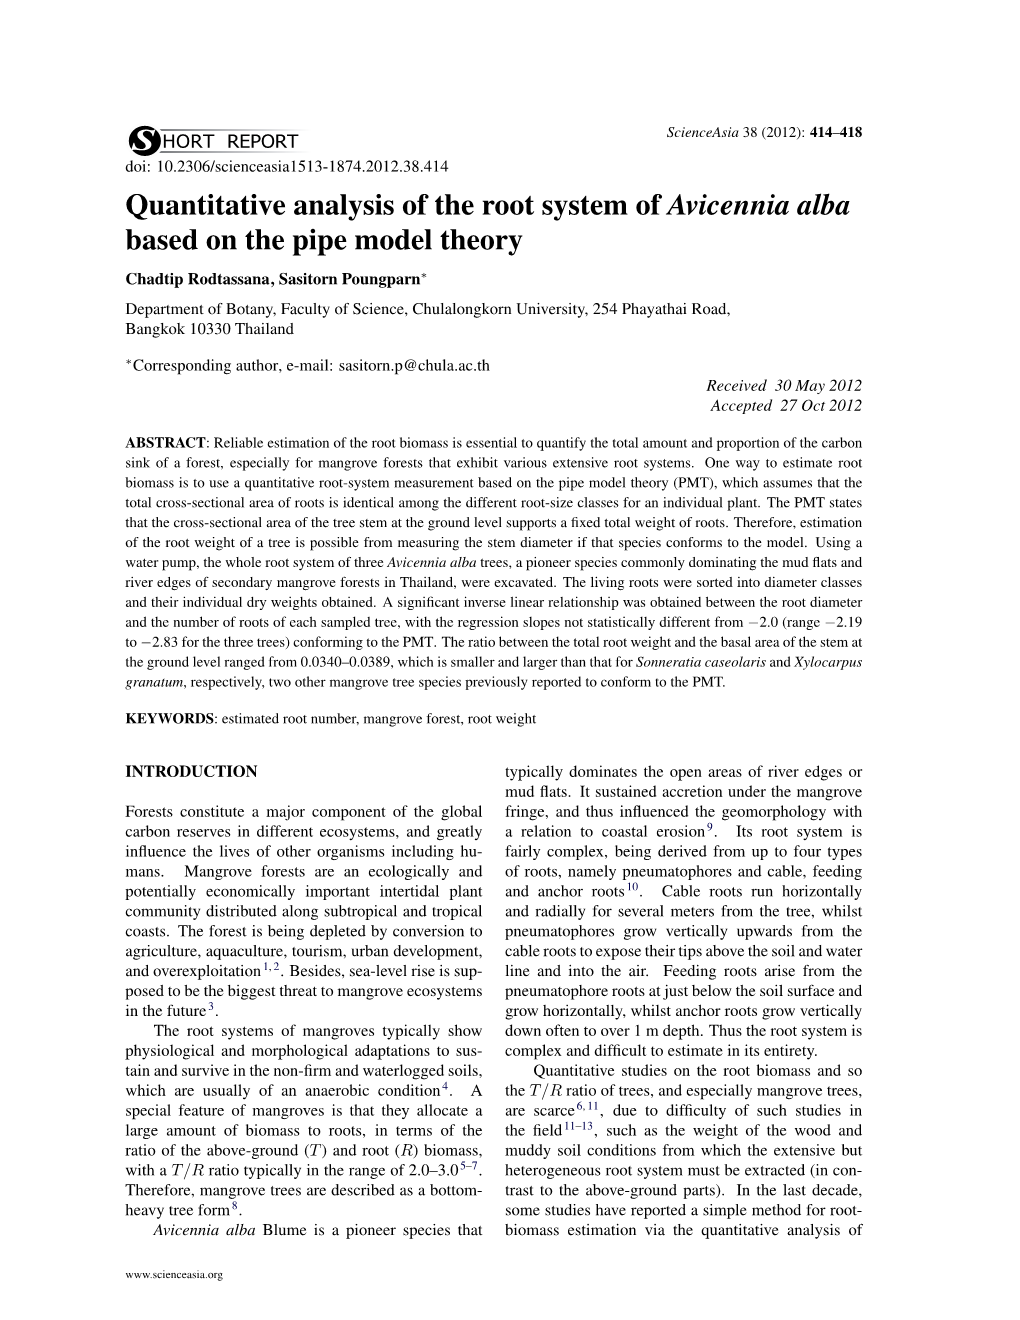 Quantitative Analysis of the Root System of Avicennia Alba Based On